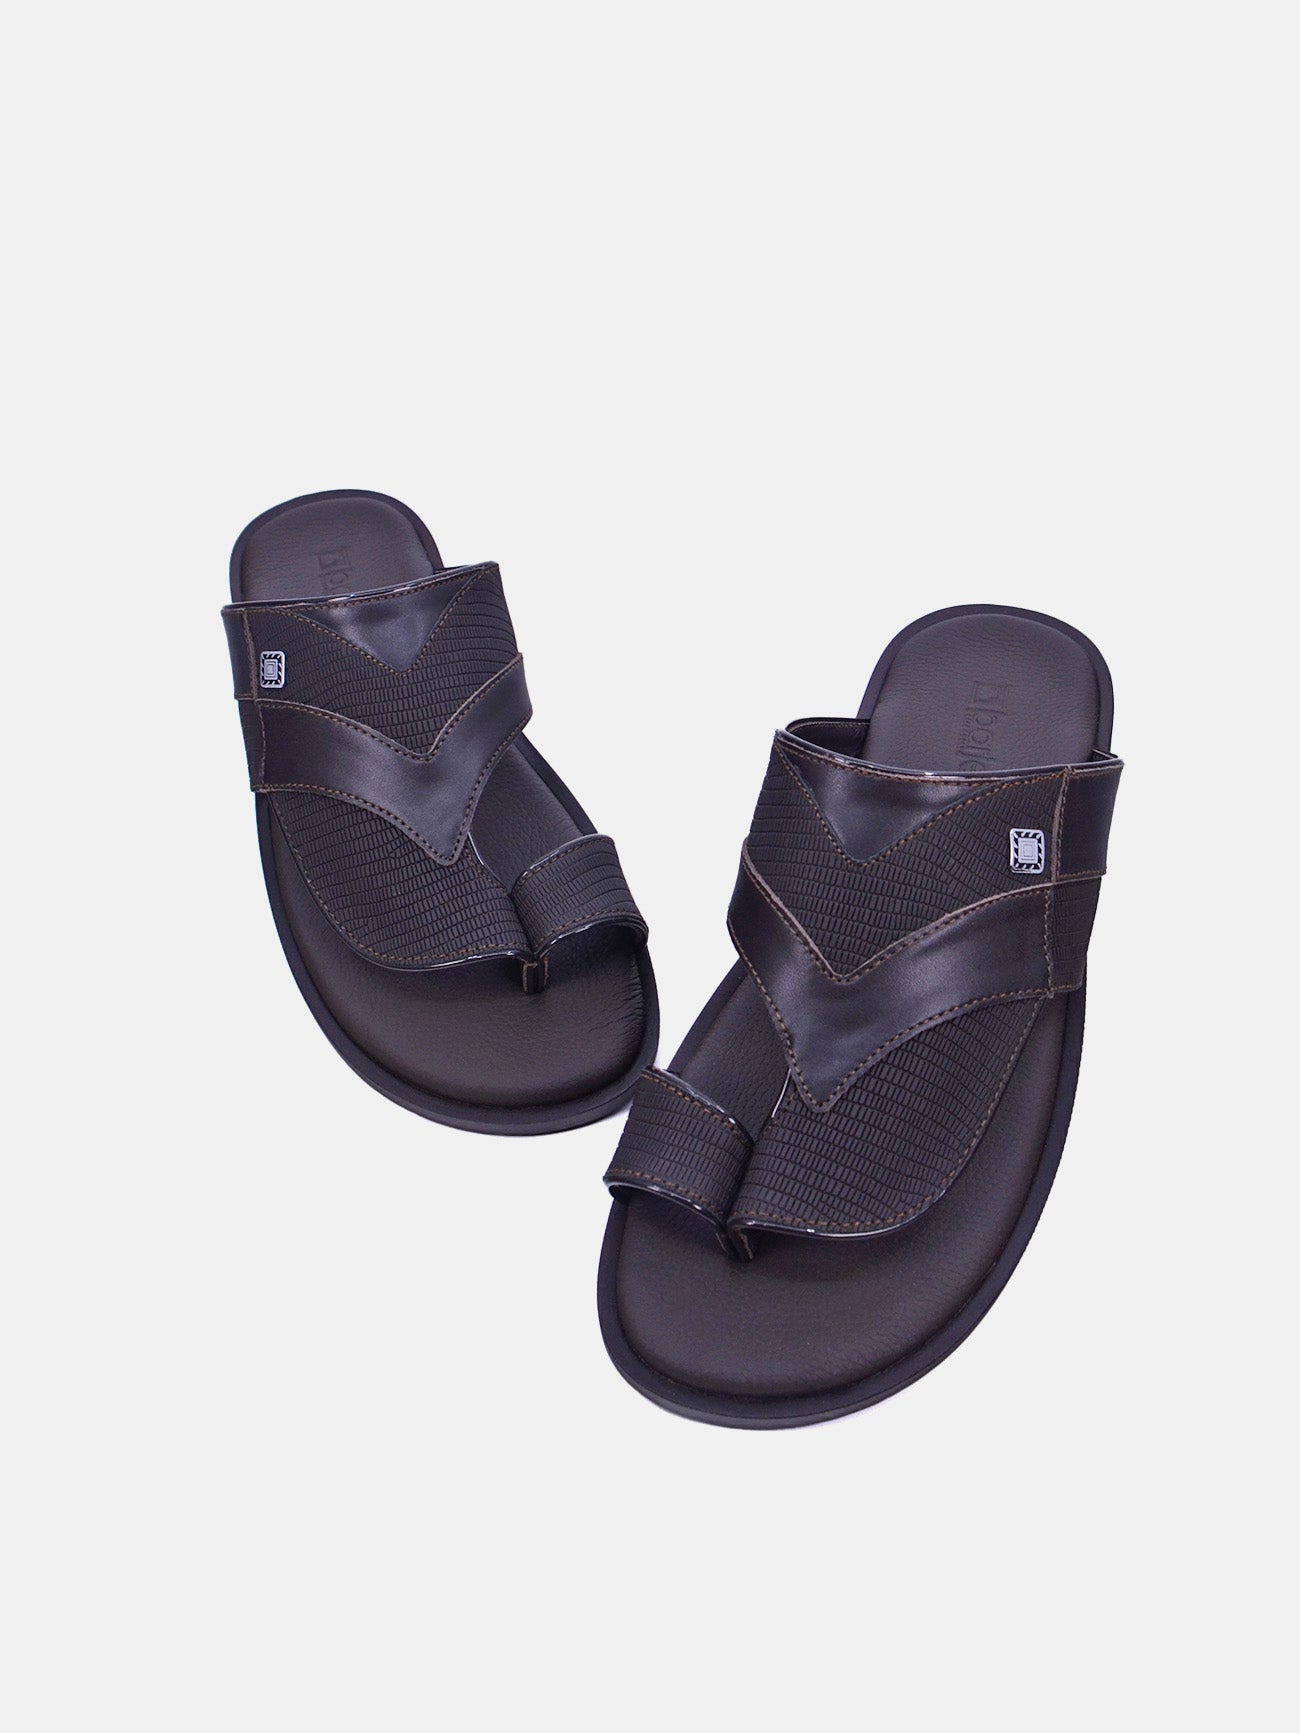 Barjeel Uno 175-042 Men's Sandals #color_Brown